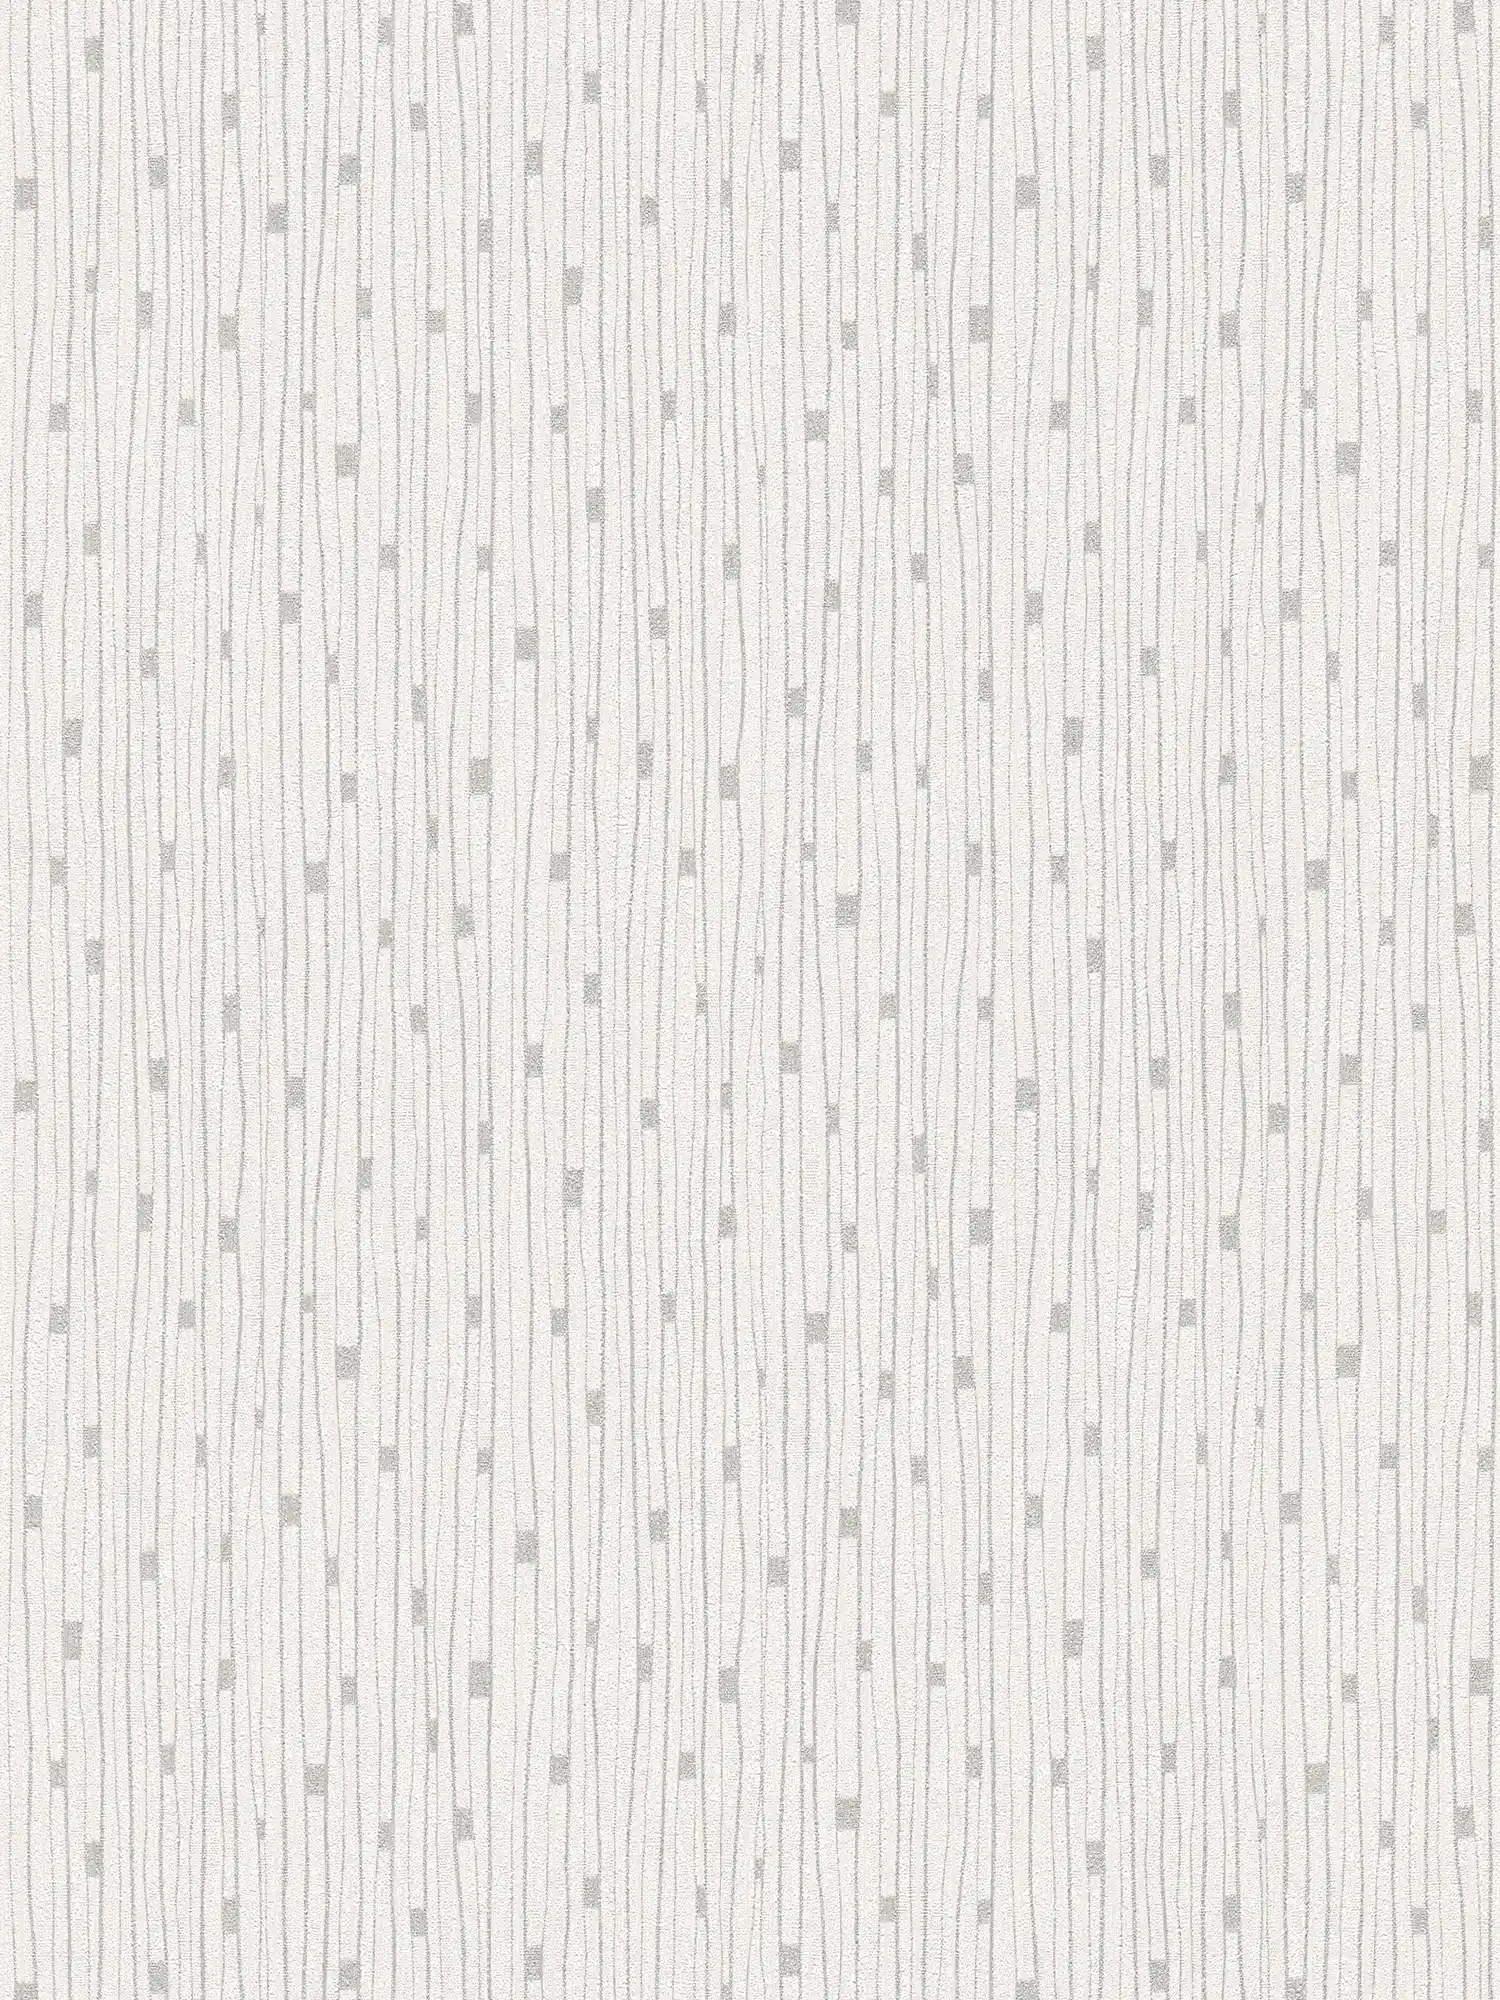 Retro wallpaper 50s line pattern - white, metallic
